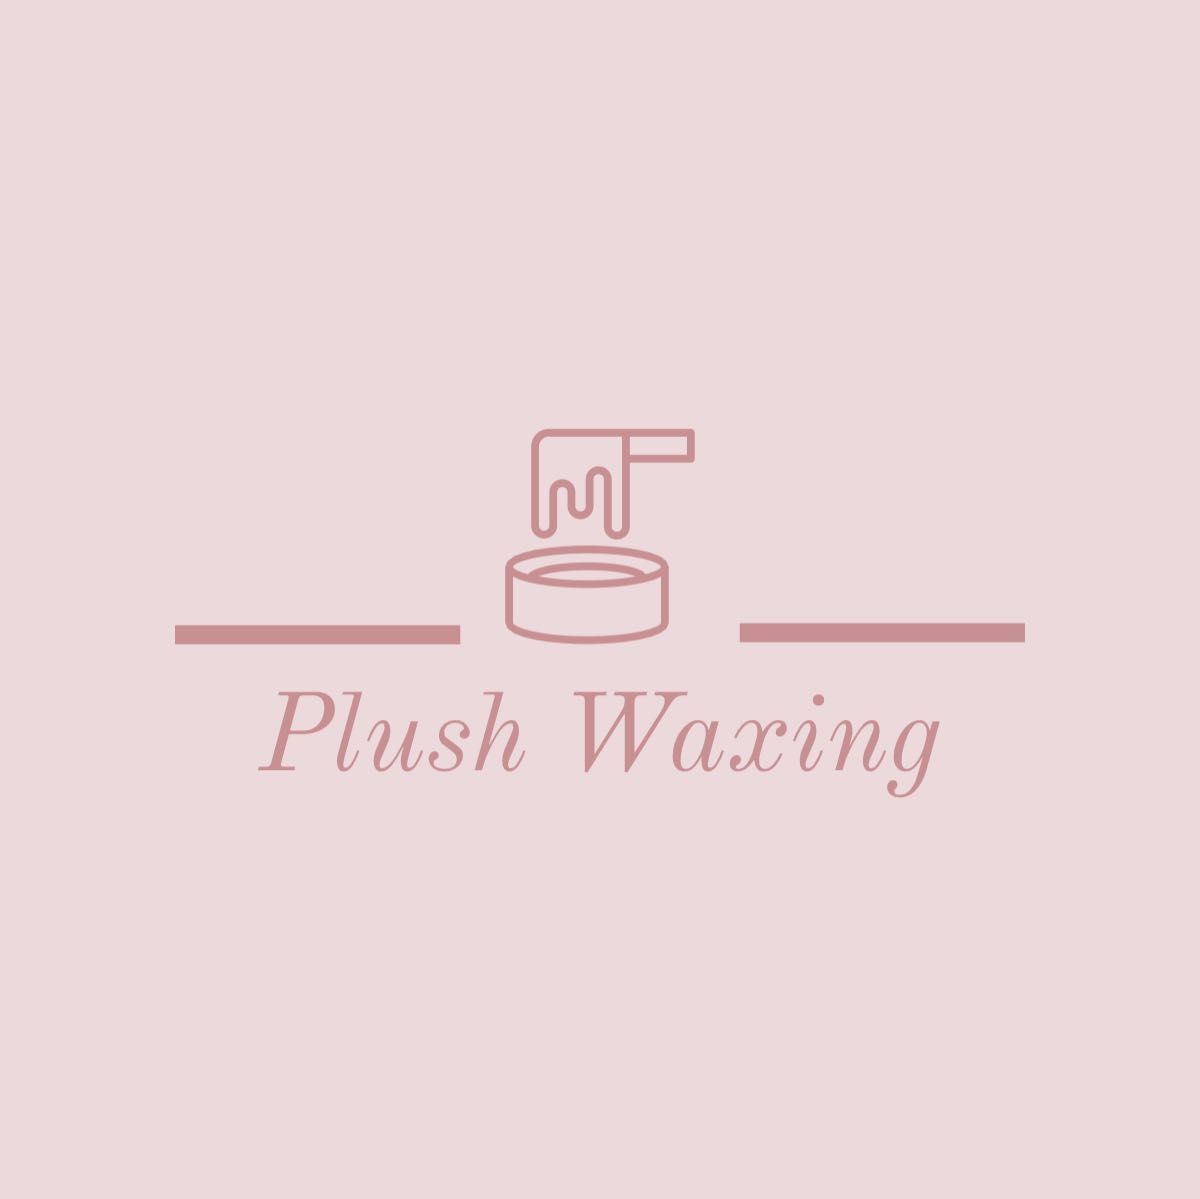 Plush Waxing, 1468 Tuskawilla Rd, Unit 1020 studio 5, Winter Springs, 32708